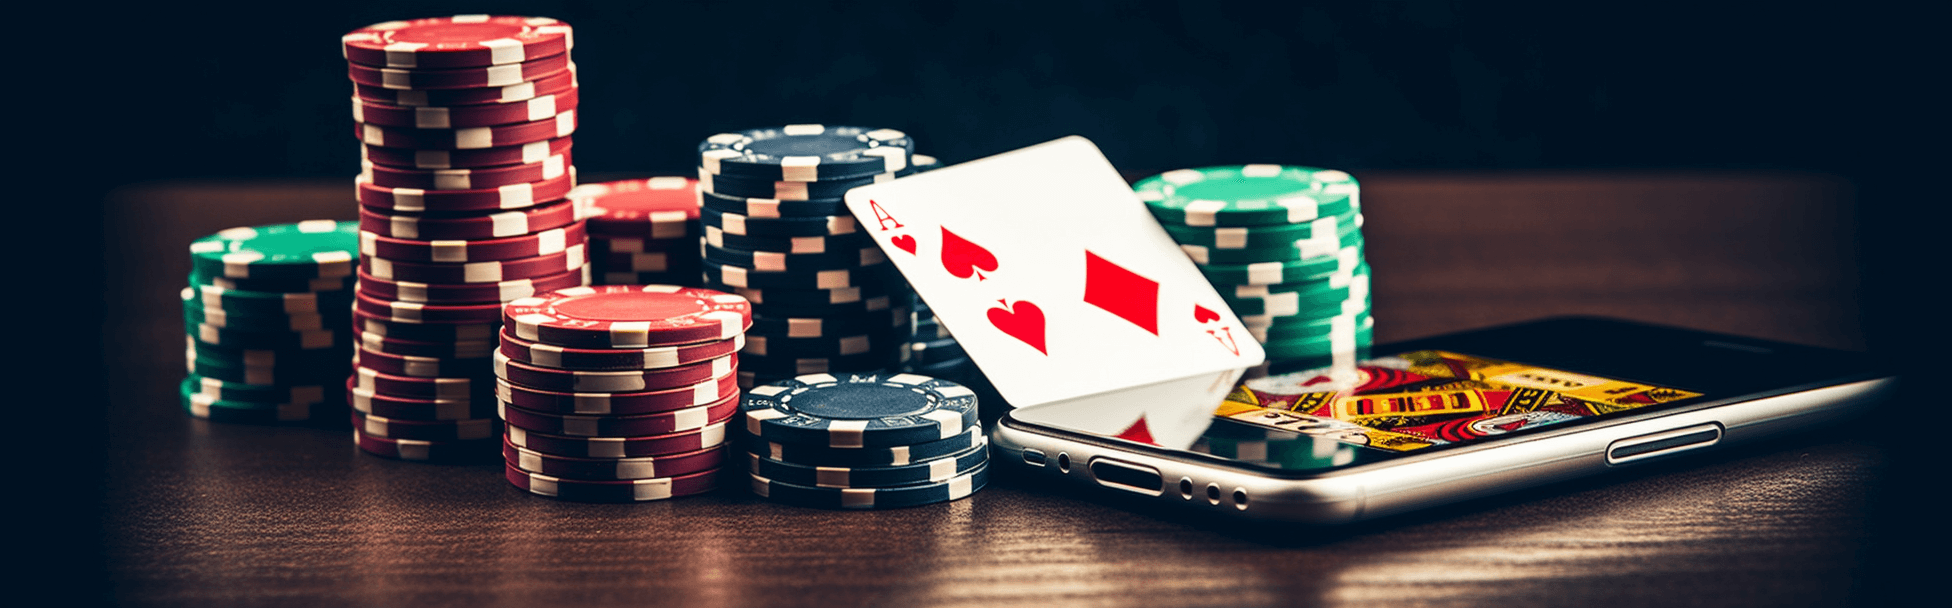 Poker en Línea con Normas Transparentes